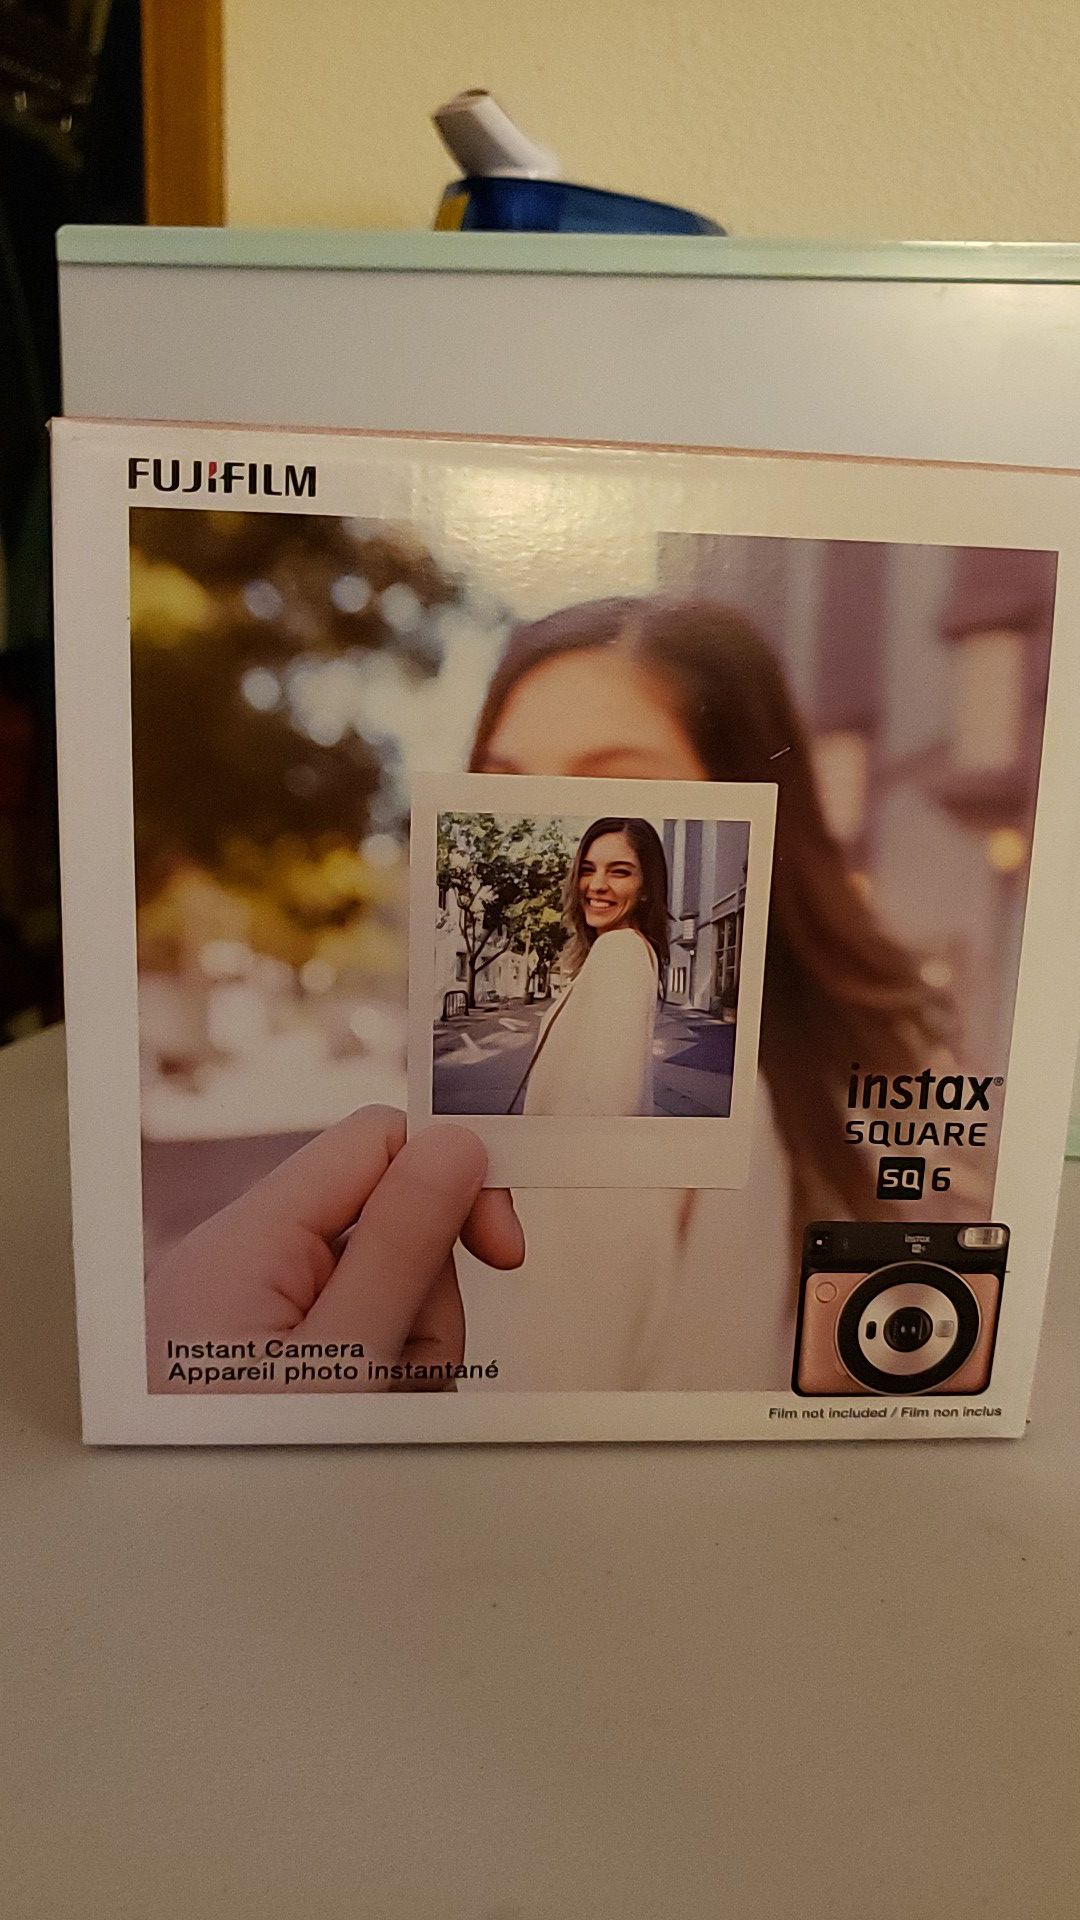 Fujifilm Instax Square SQ 6